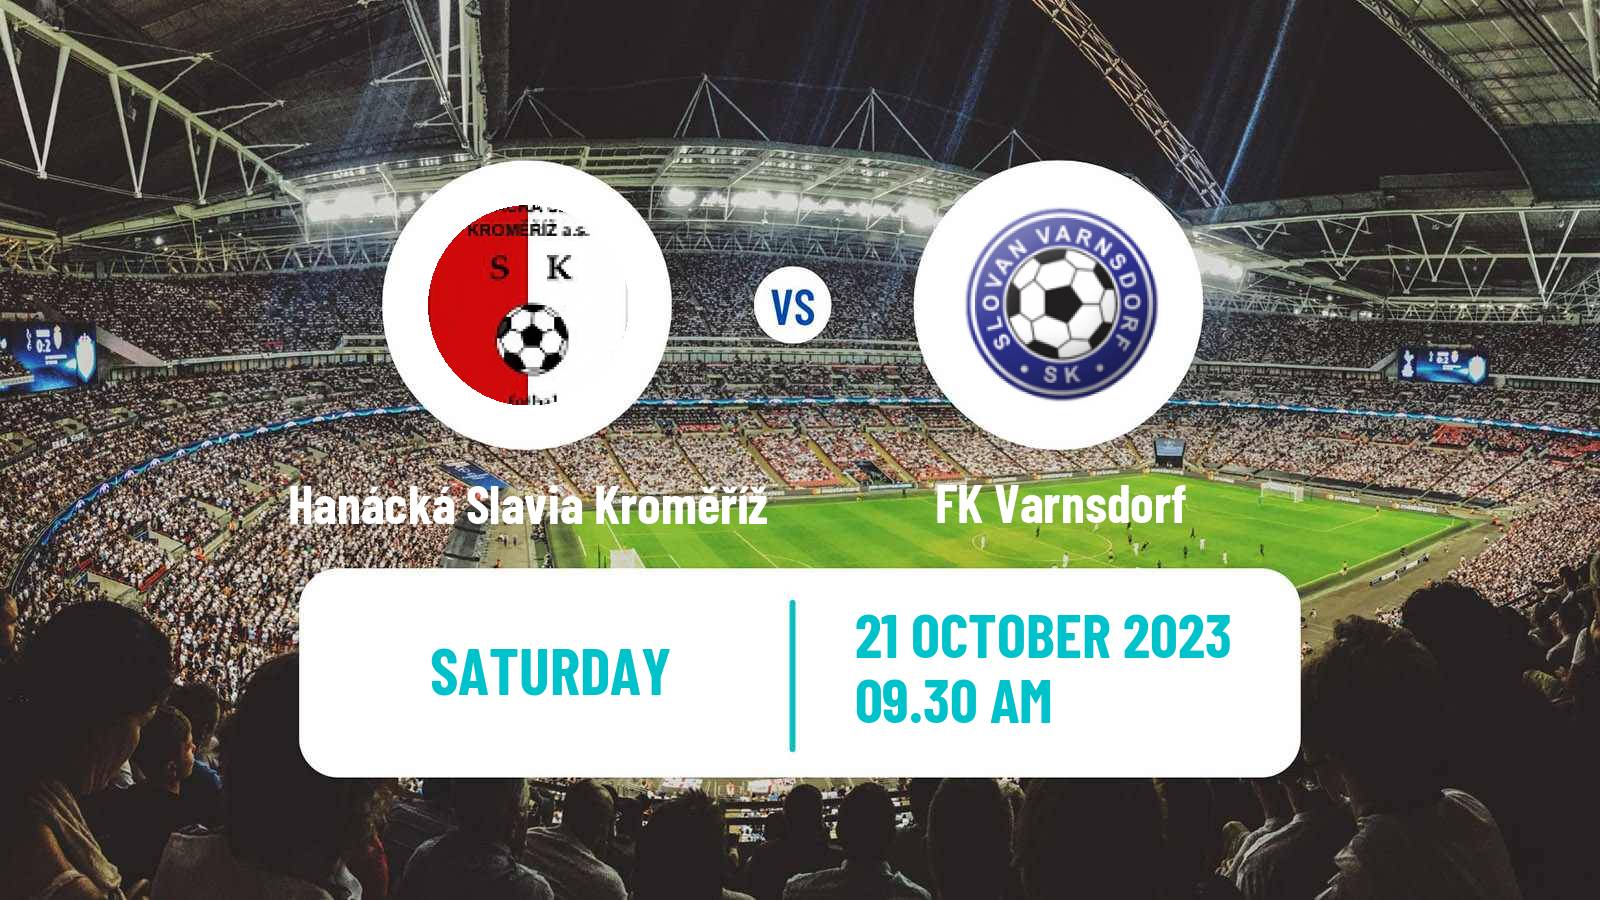 FK Varnsdorf vs Slavia Prague B - live score, predicted lineups